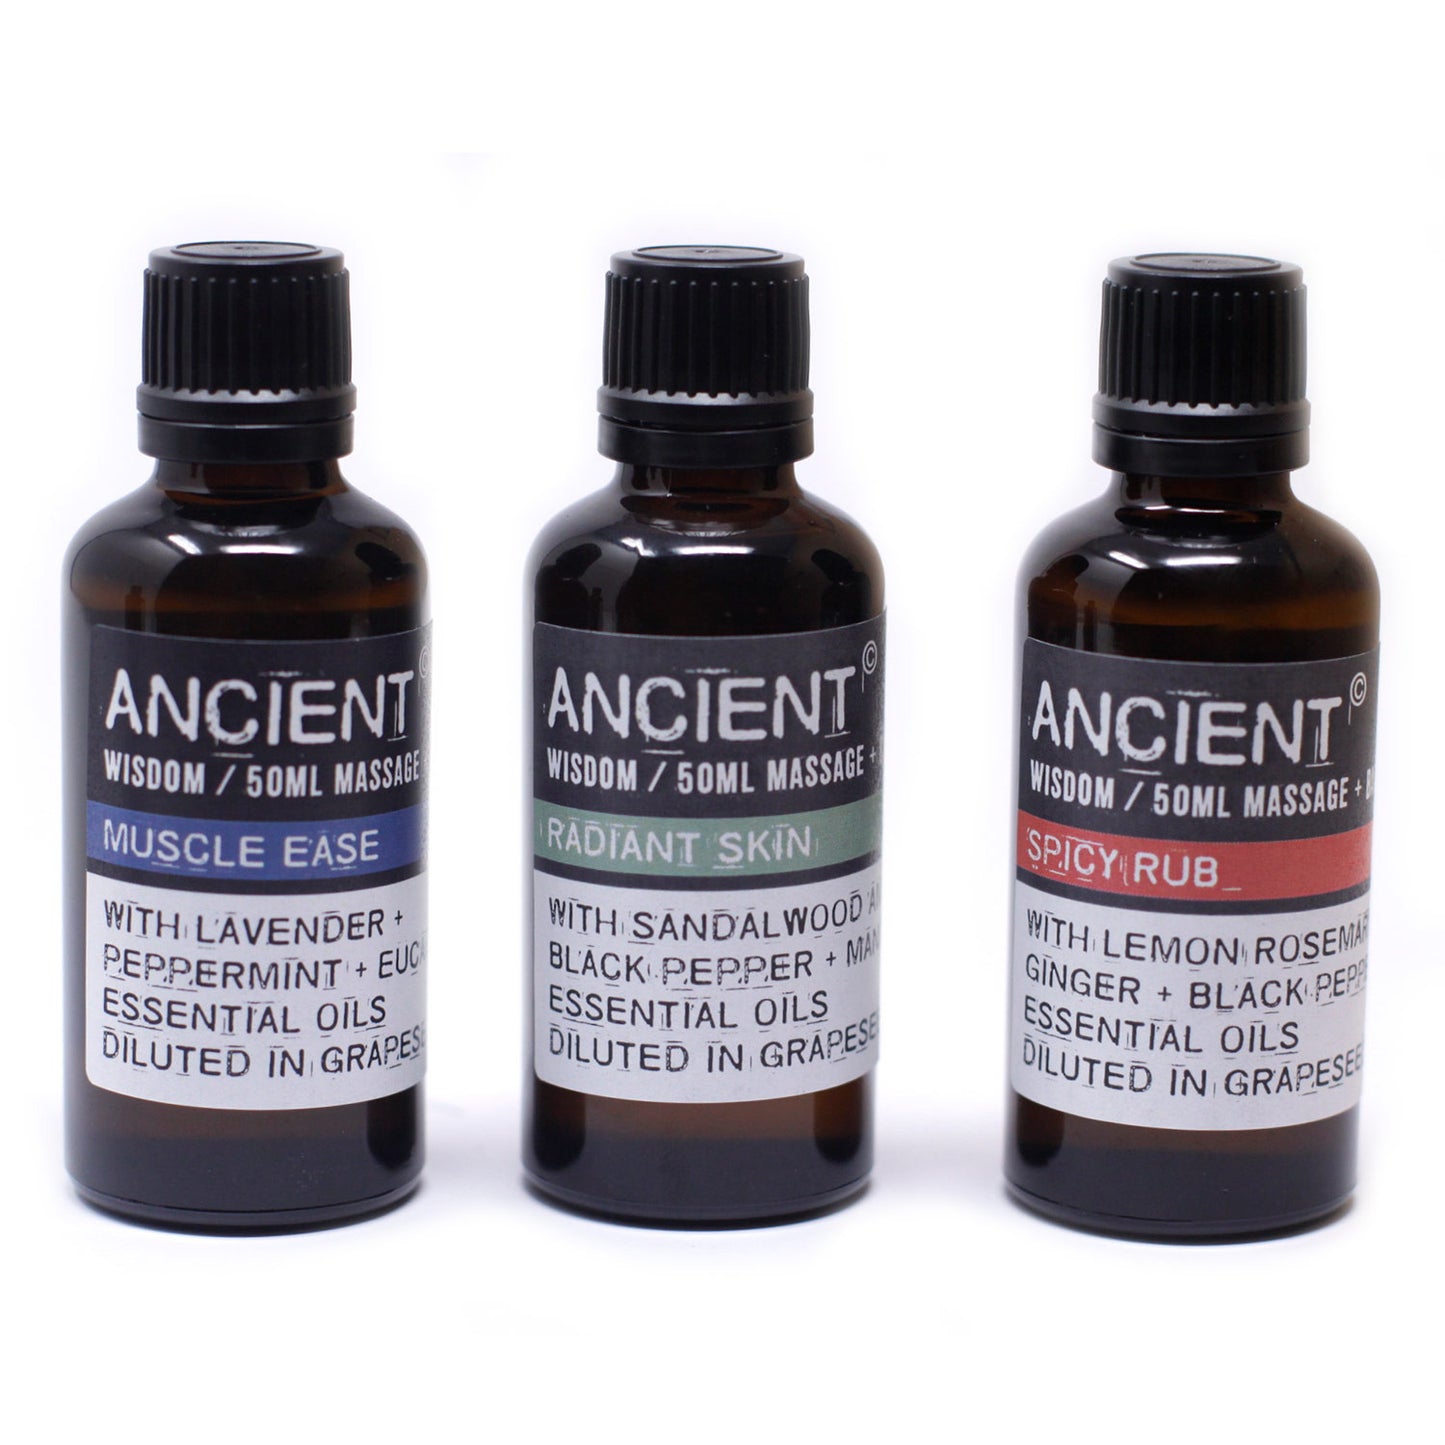 Peppermint Fresh Massage Oil - 50ml